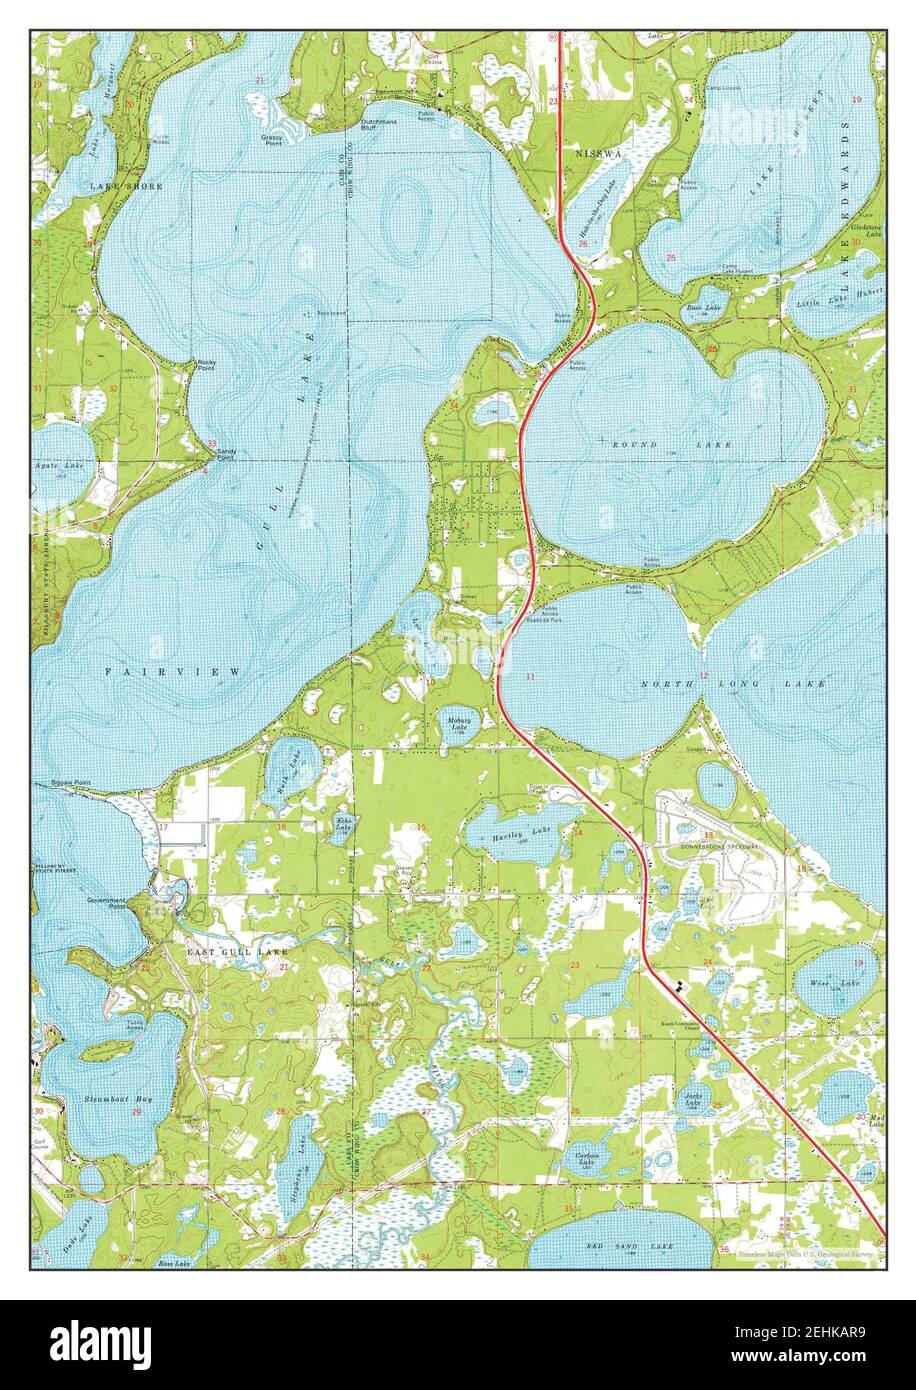 Gull Lake, Minnesota, map 1973, 1:24000, United States of America by Timeless Maps, data U.S. Geological Survey Stock Photo